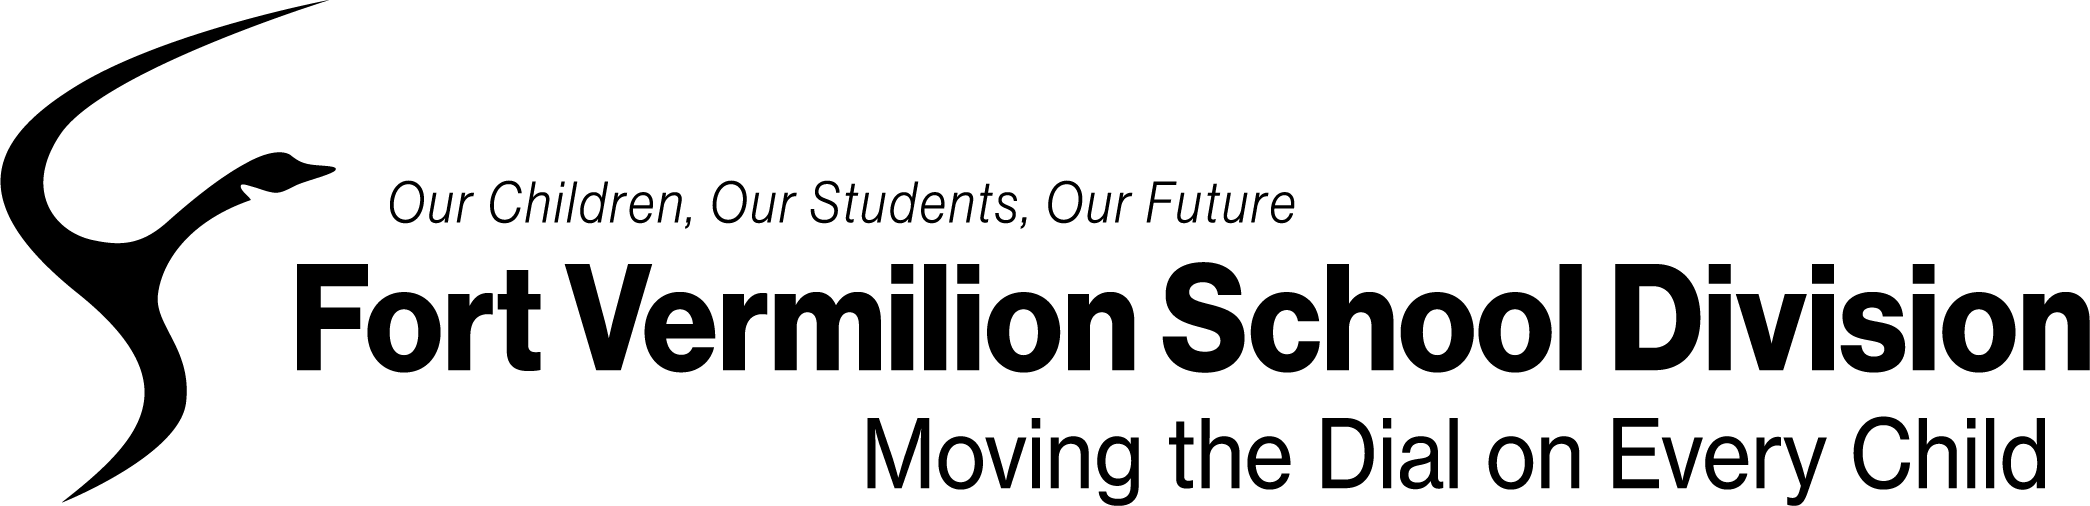 FVSD logo